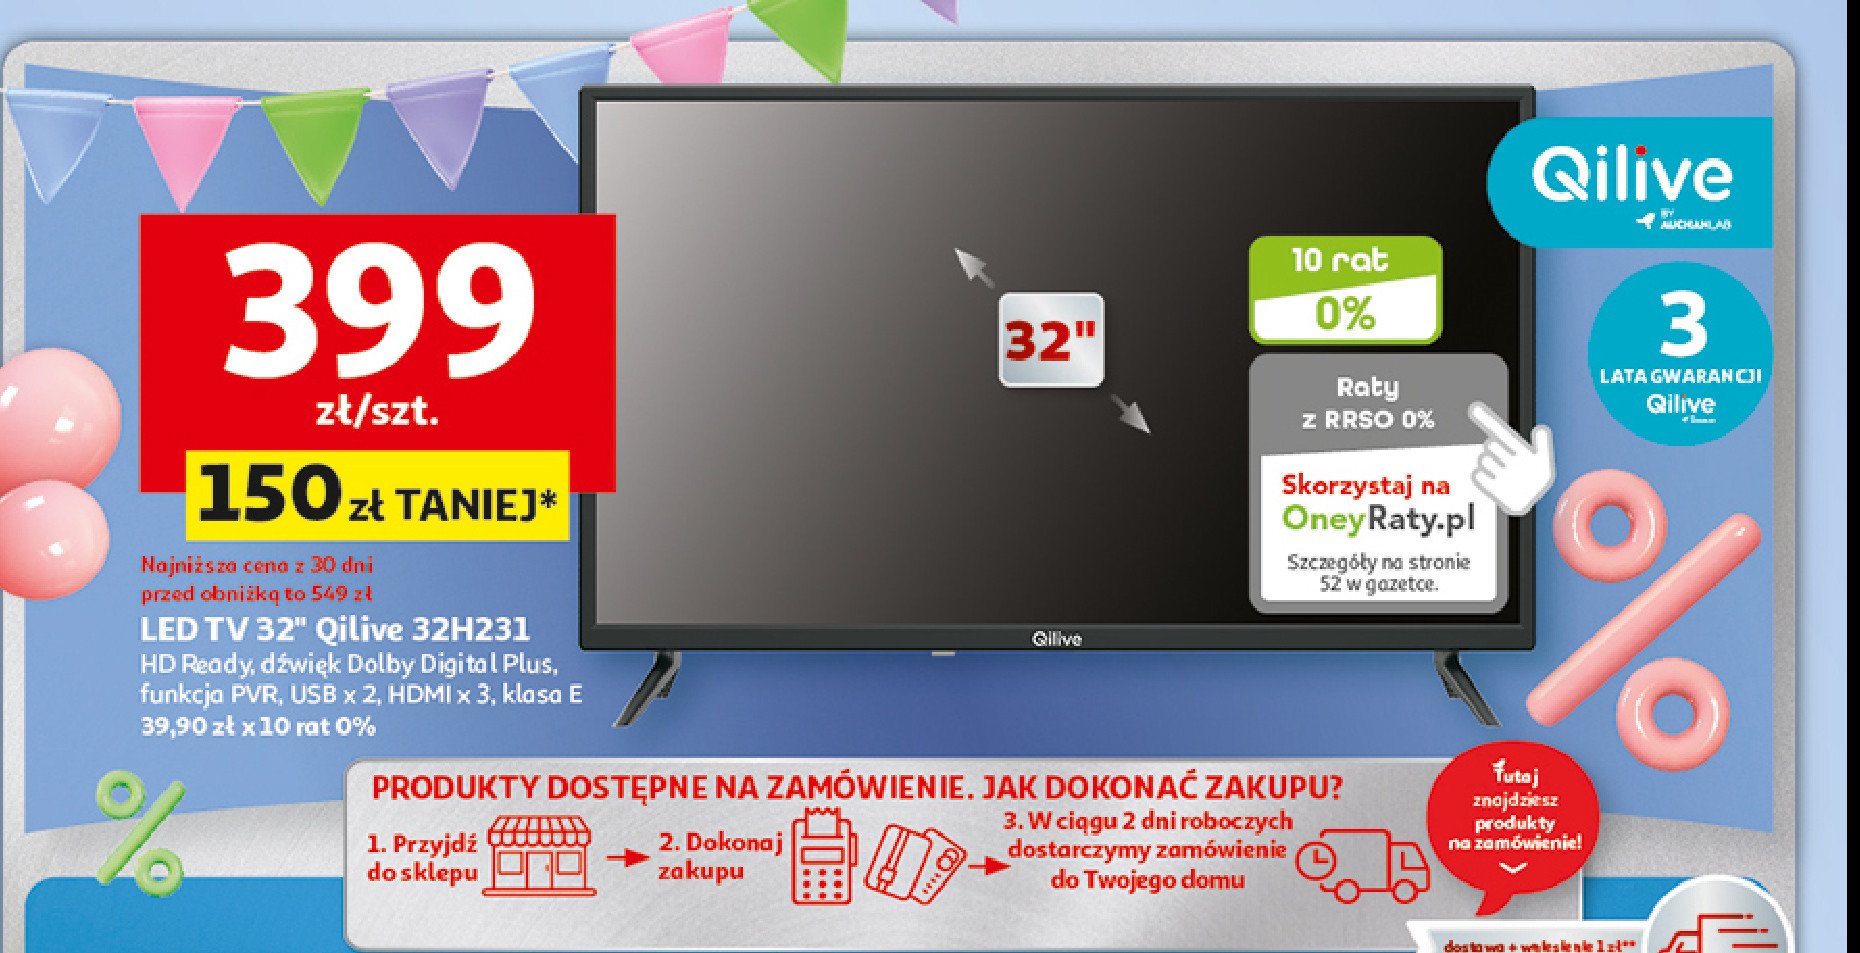 Telewizor 32'' 32h231 Qilive promocja w Auchan